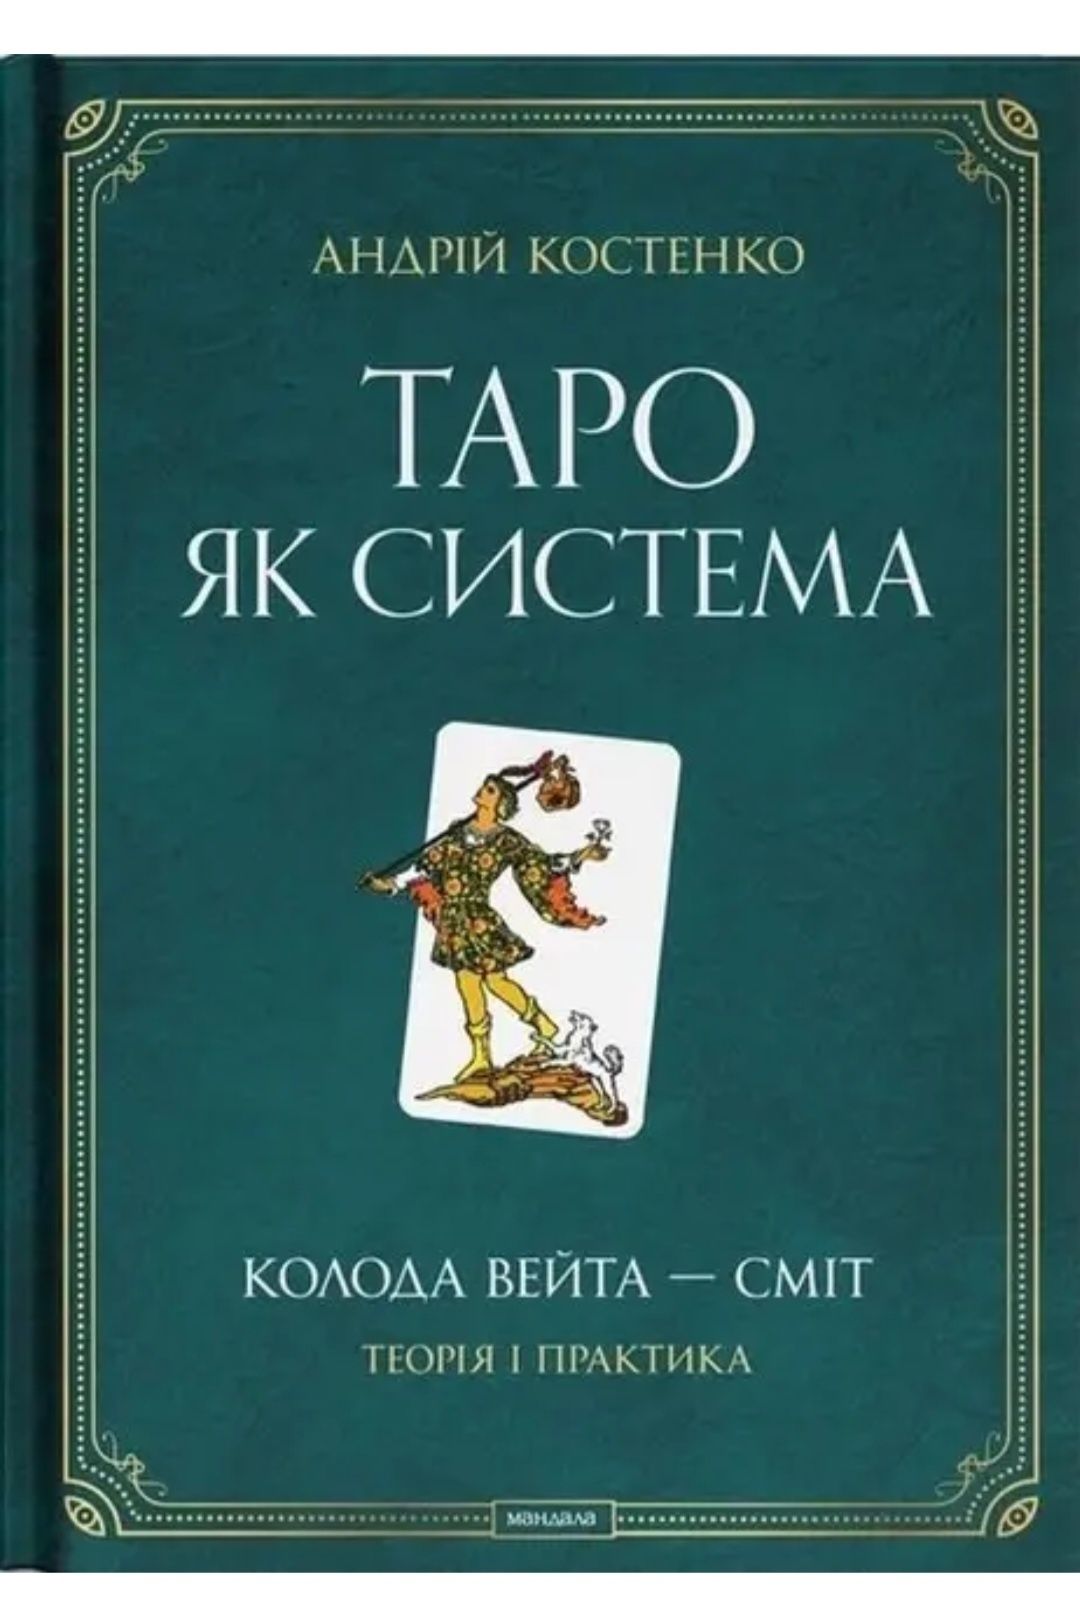 Книга про Таро Костенко Таро як система